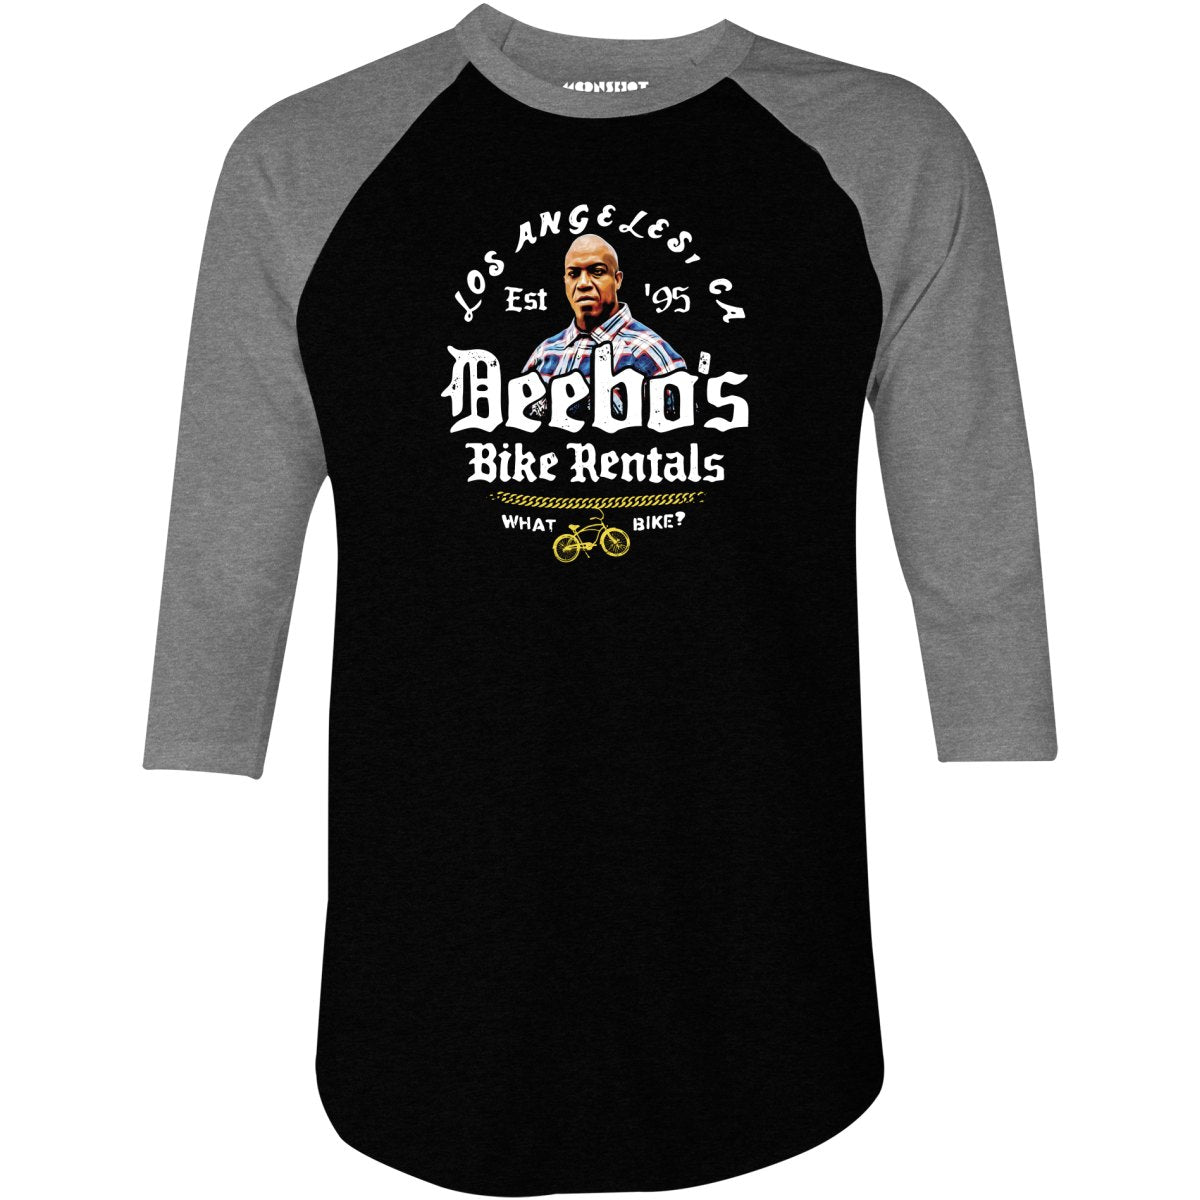 Deebo's Bike Rentals - What Bike? - 3/4 Sleeve Raglan T-Shirt